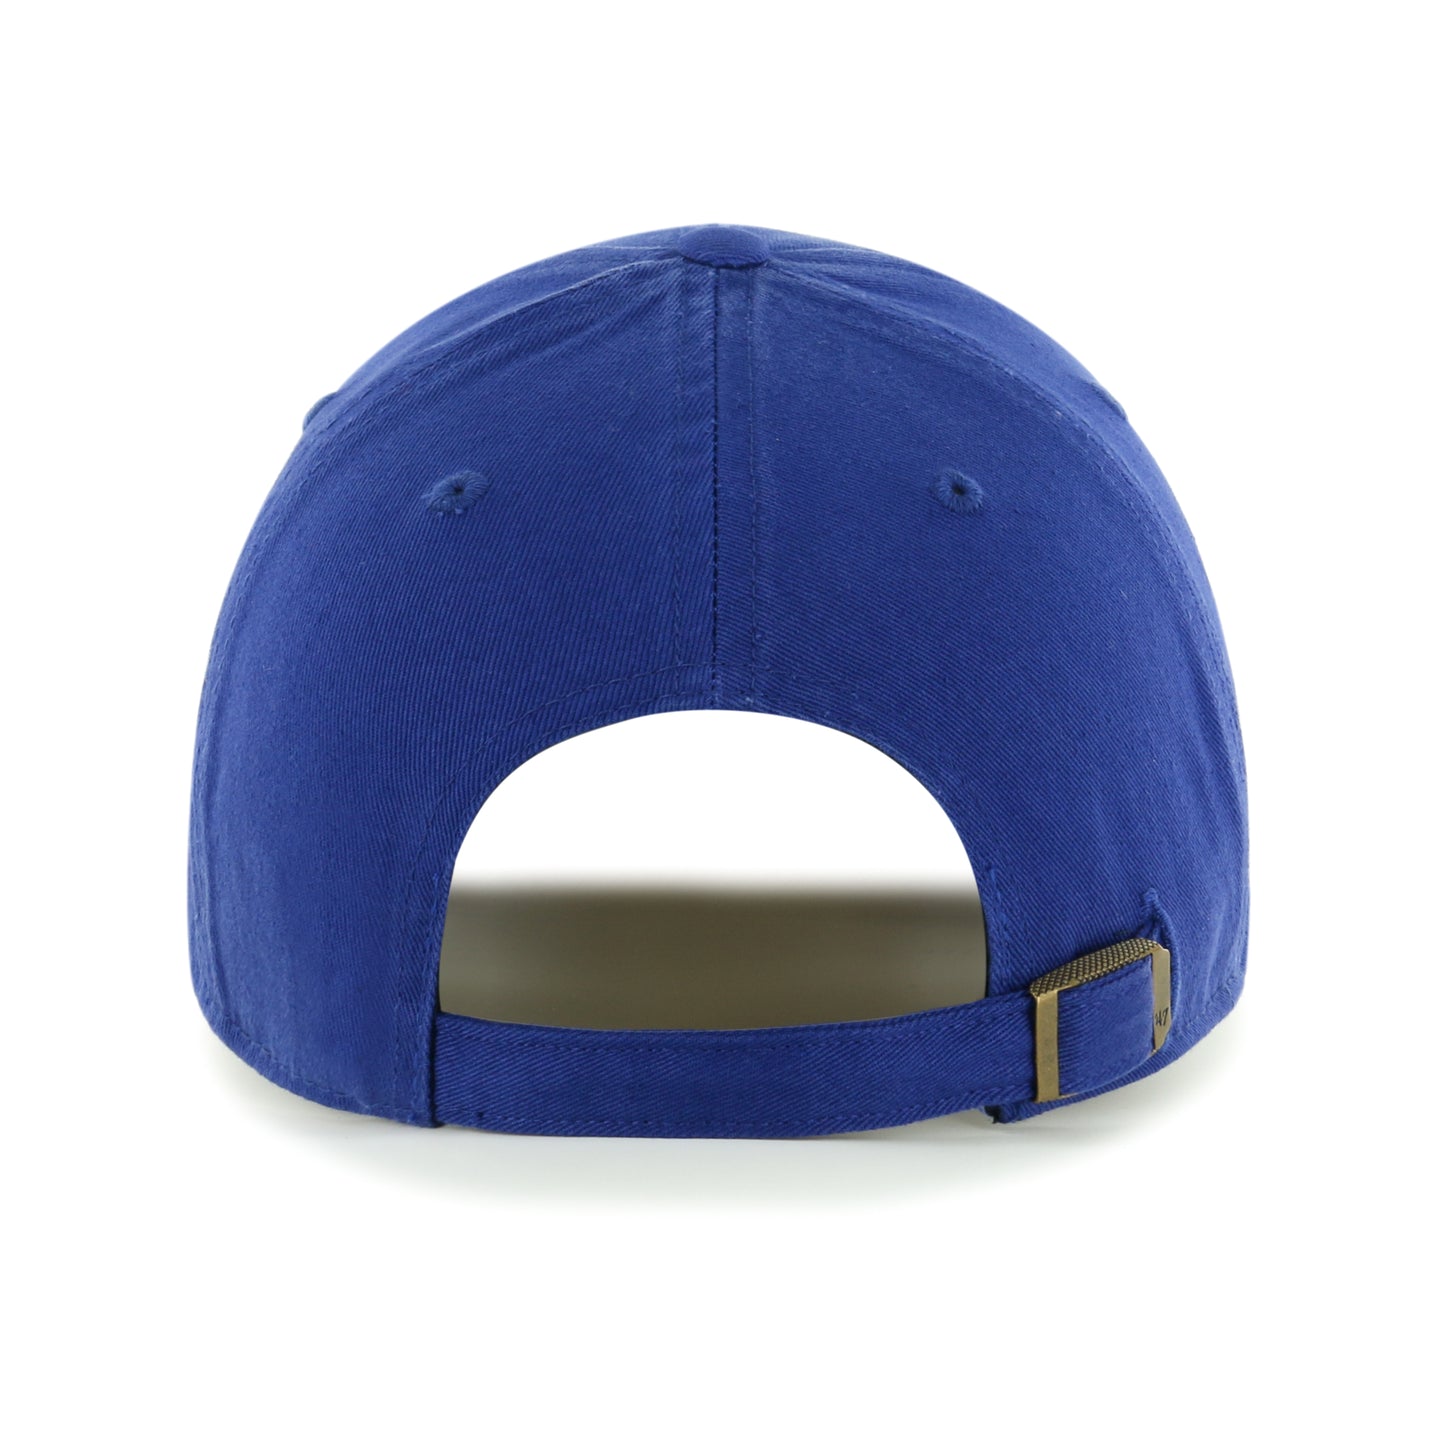 New York Giants '47 Brand Fletcher MVP Adjustable Hat